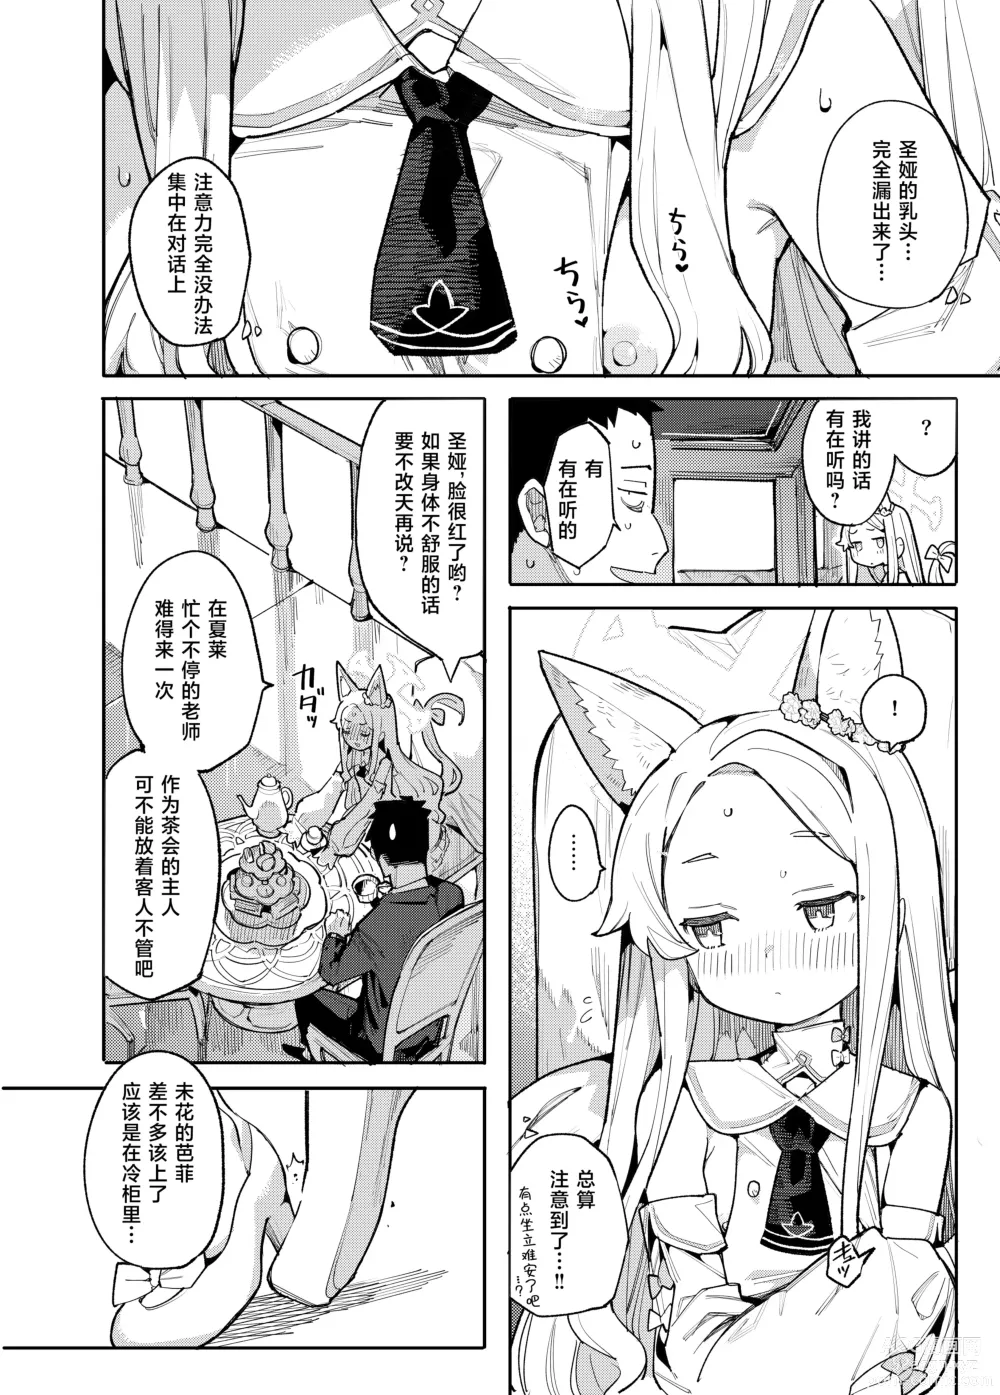 Page 3 of doujinshi 雌性狐狸看到了充满色情的未来